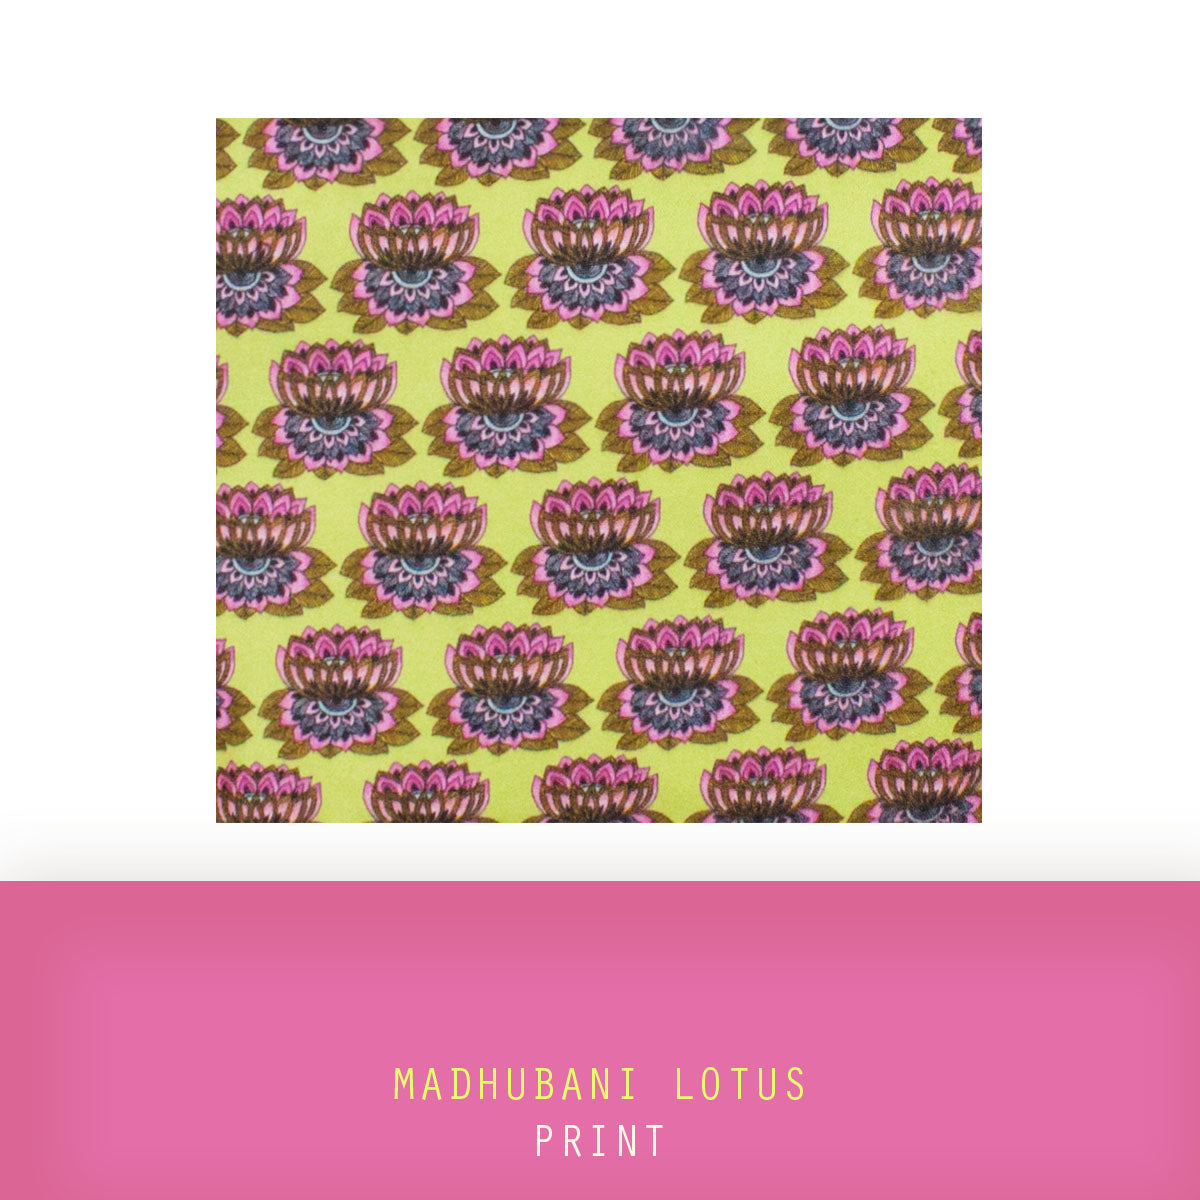 Madhubani Lotus Tote Bag